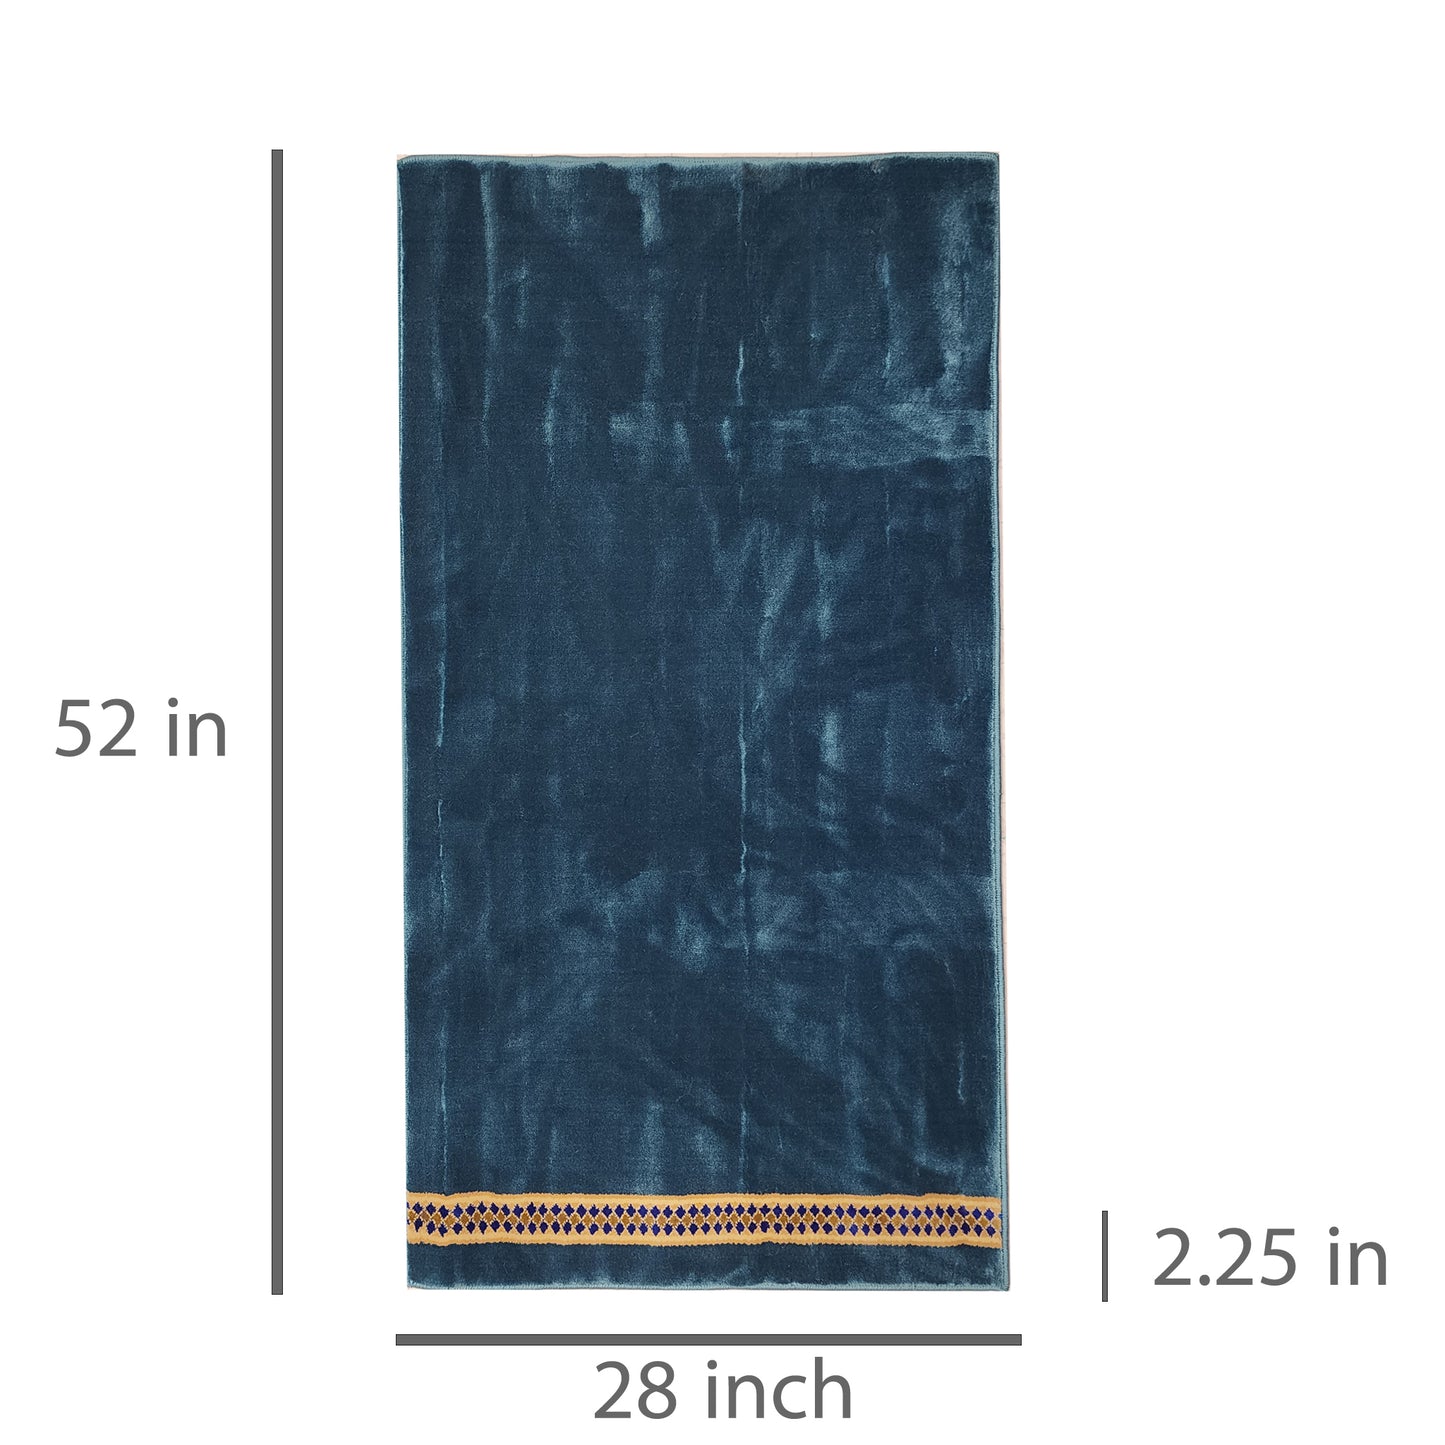 SUFI Light Blue Single Prayer Carpet Mat